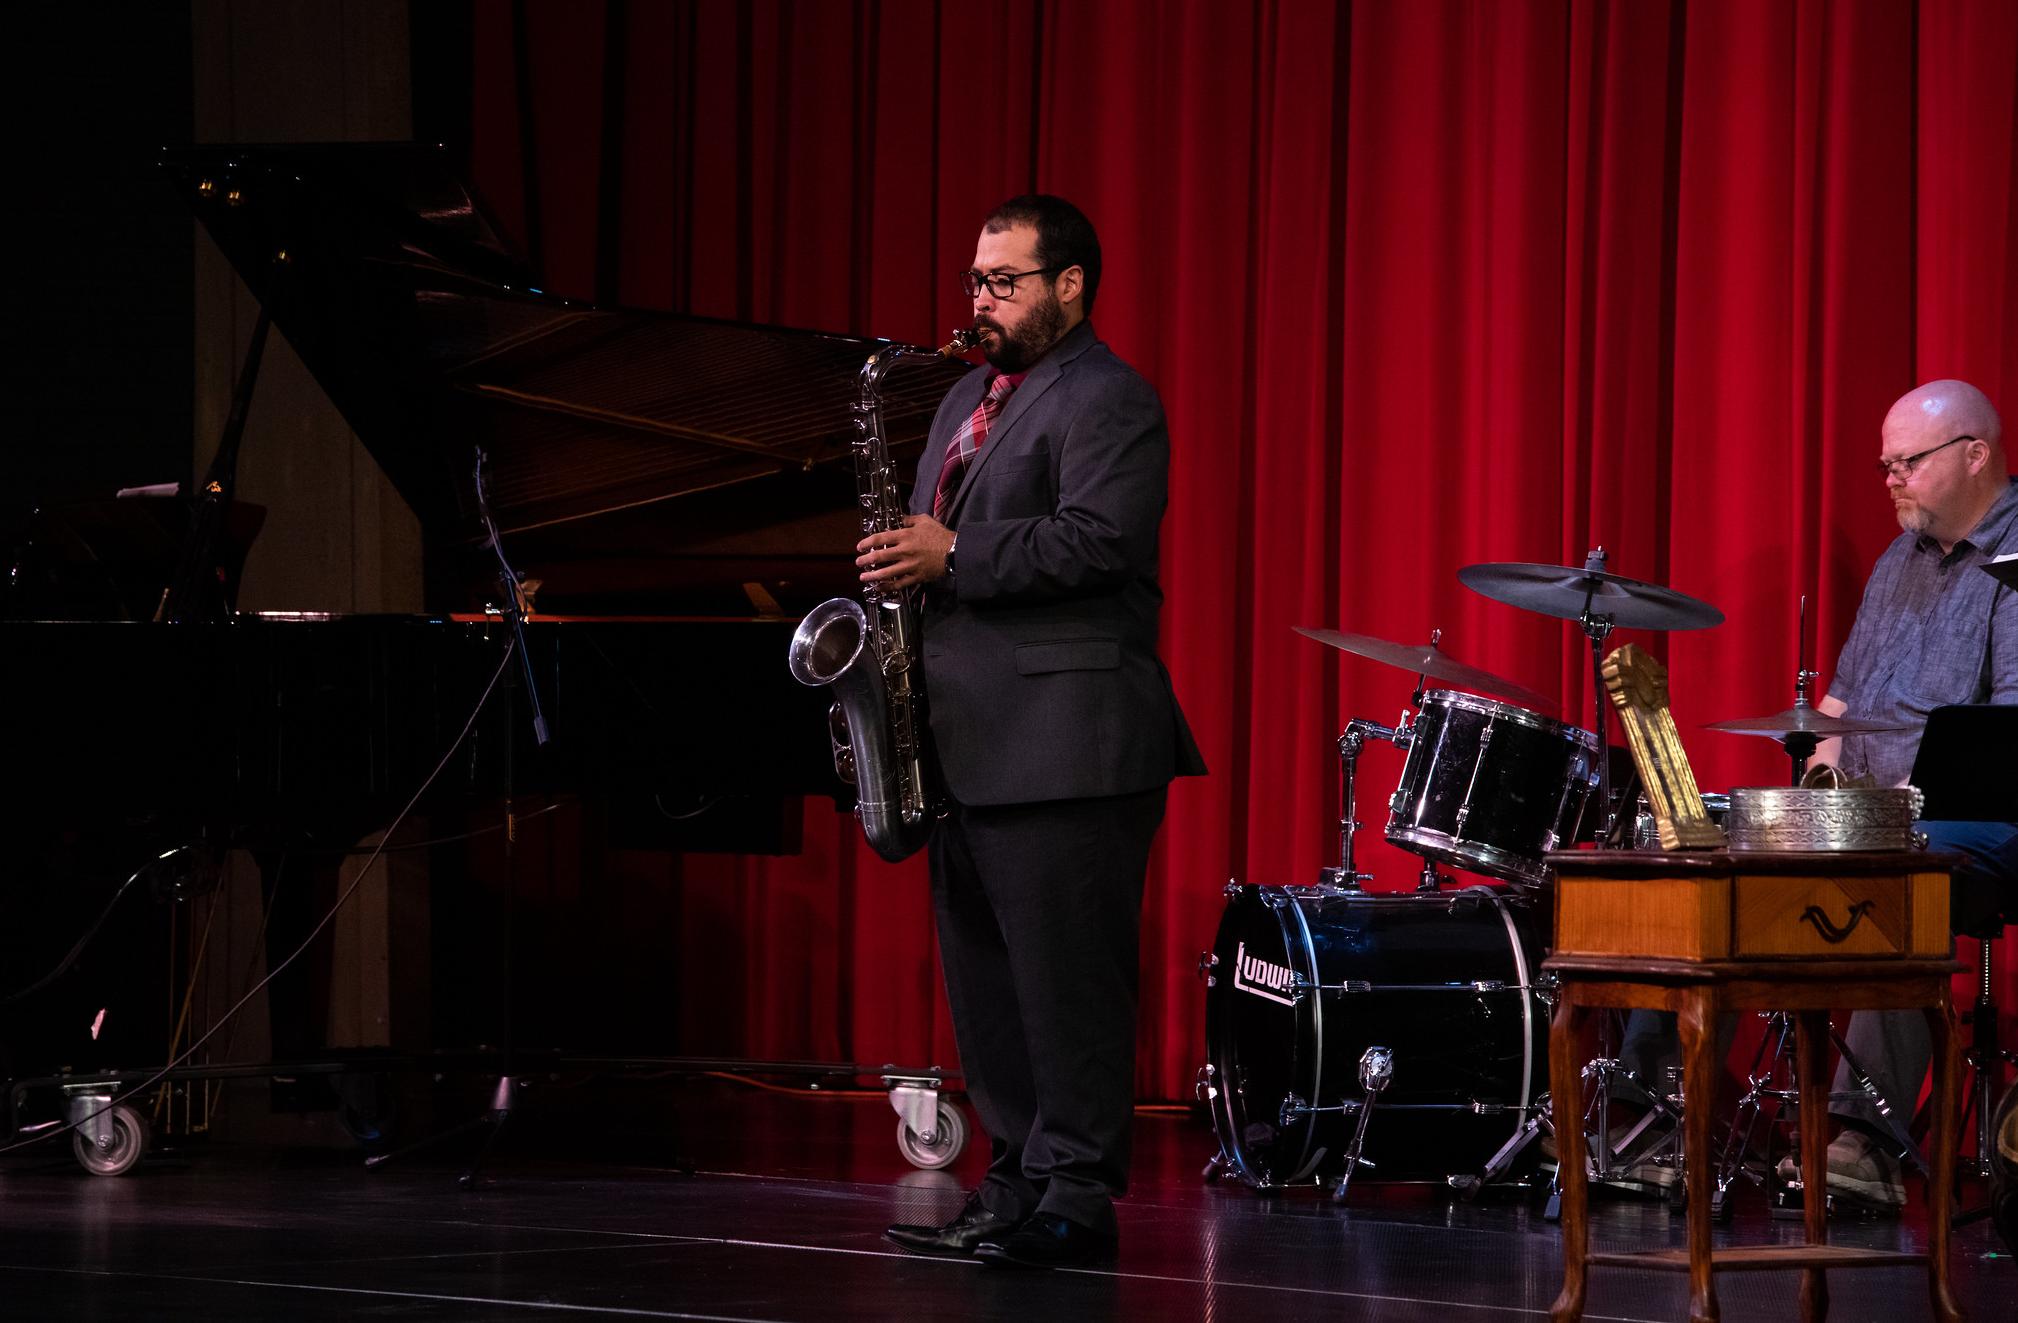 dr. luis palacios plays a saxophone at a previous concert